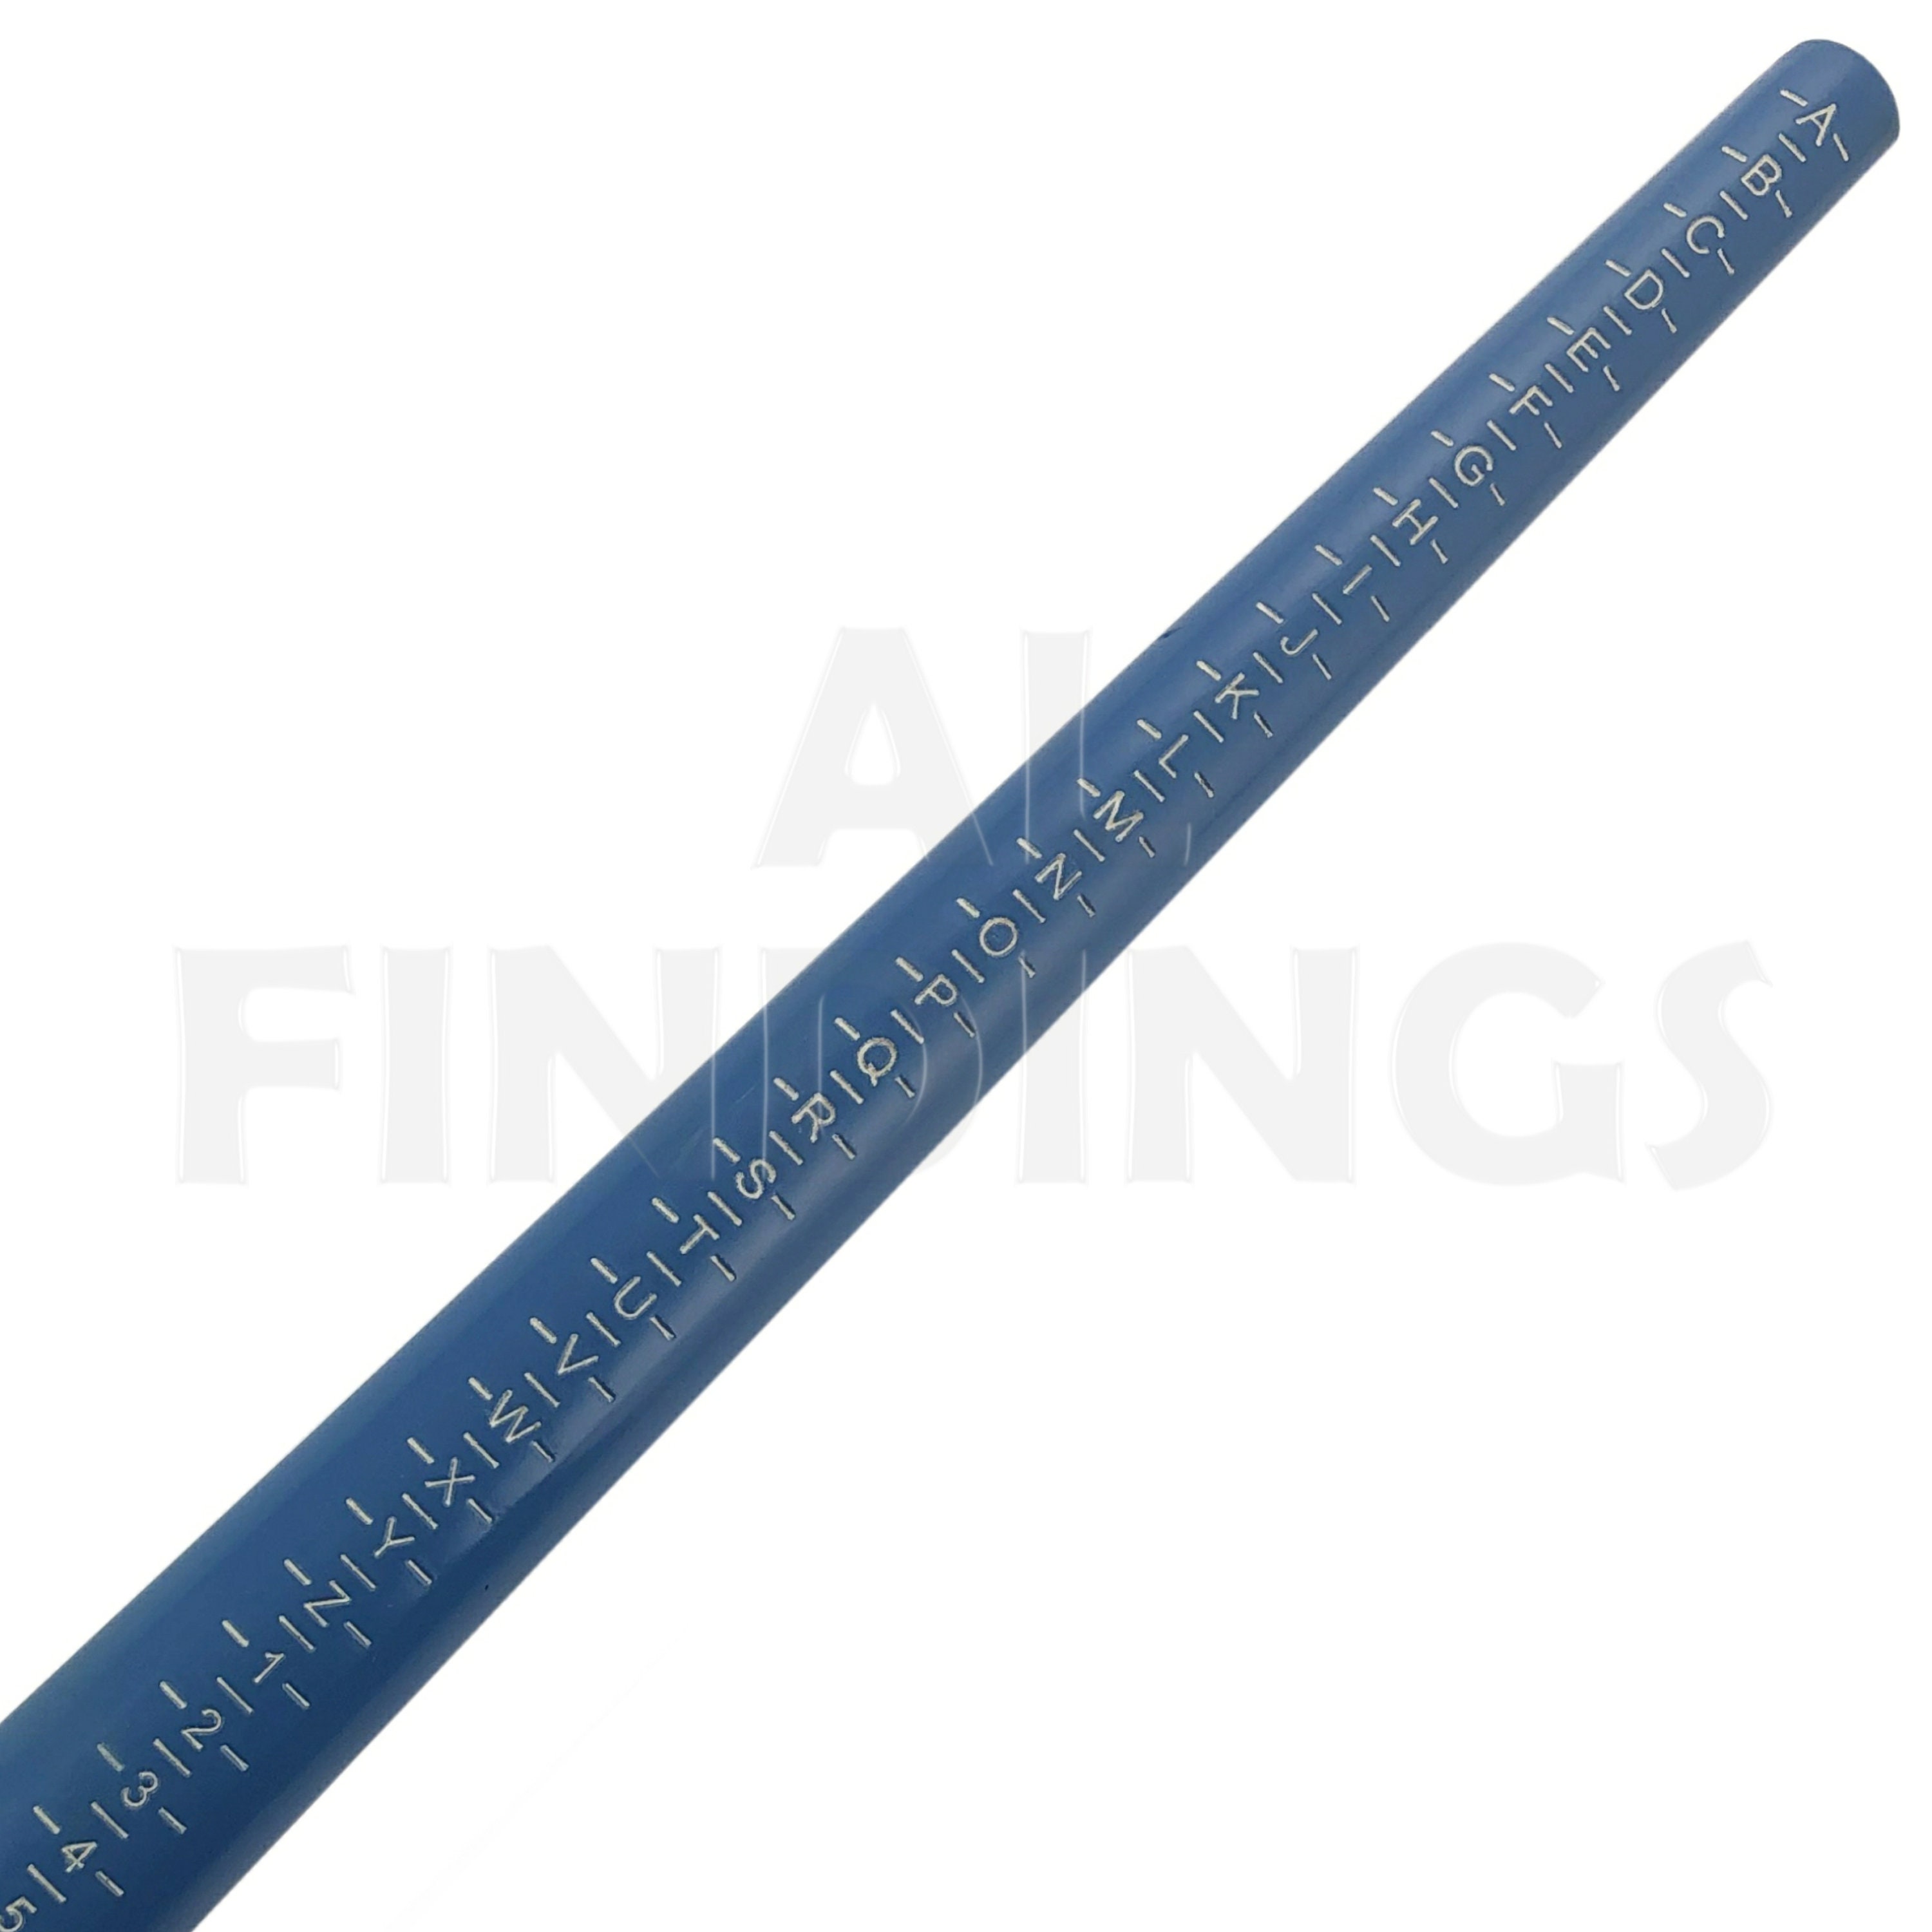 Ring Sizer Measure Gauge Stick All UK Sizes AZ6 Craft Wedding Tool 30 